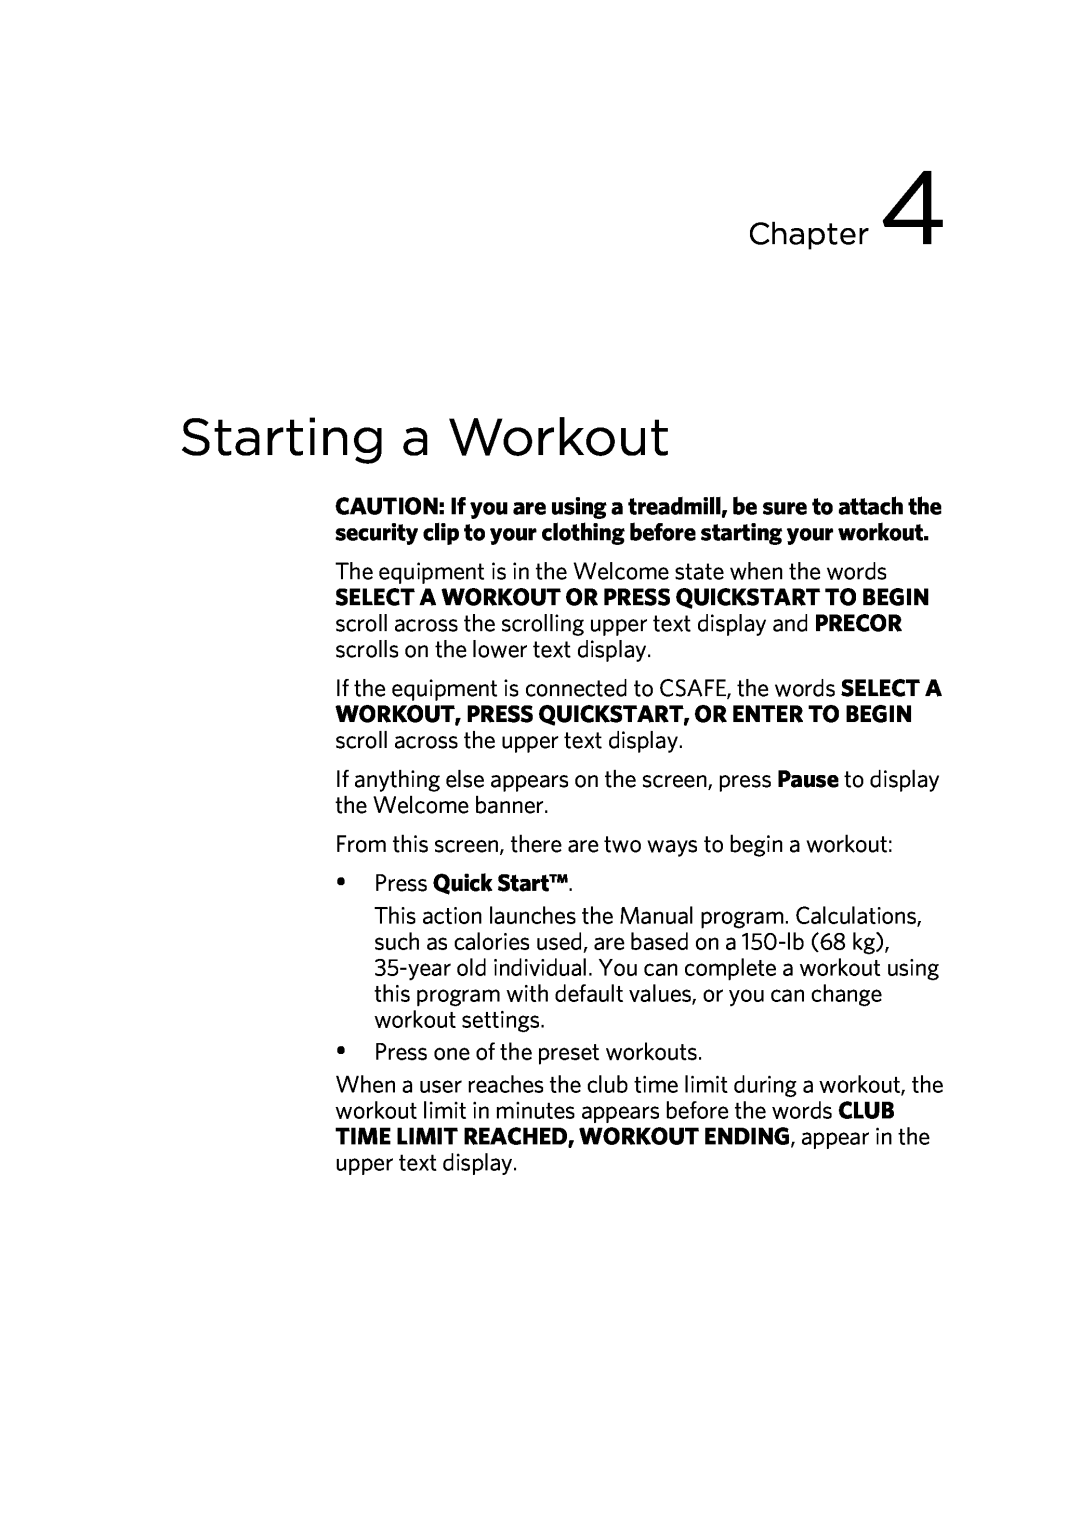 Precor P30 manual Starting a Workout, Workout, Press Quickstart, Or Enter To Begin,  Press Quick Start, Chapter 